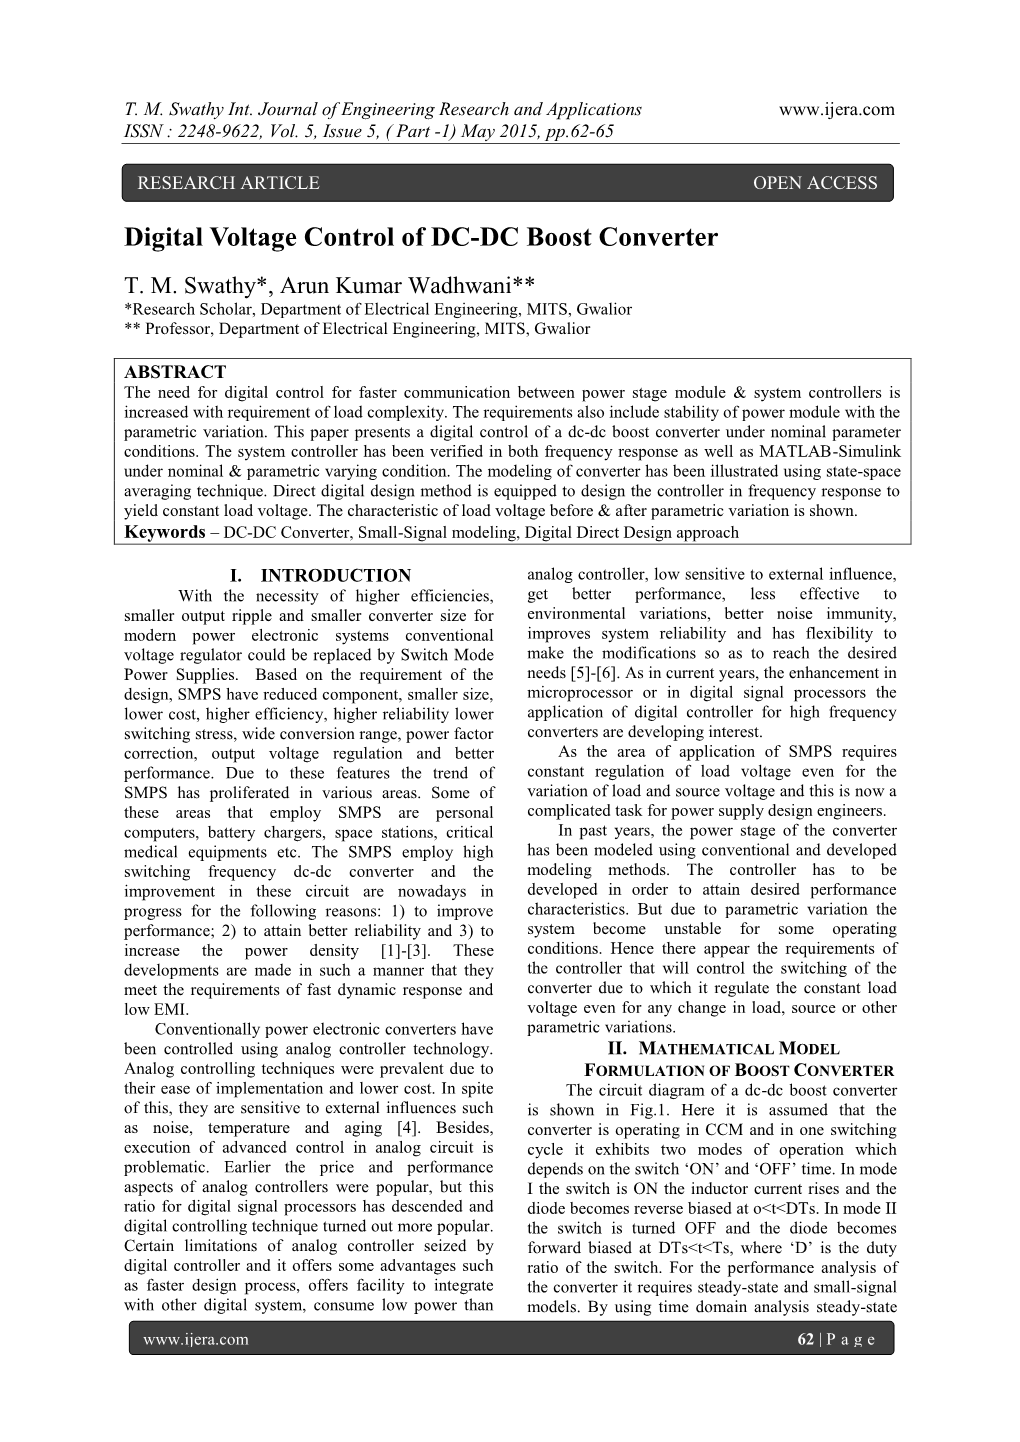 Digital Voltage Control of DC-DC Boost Converter